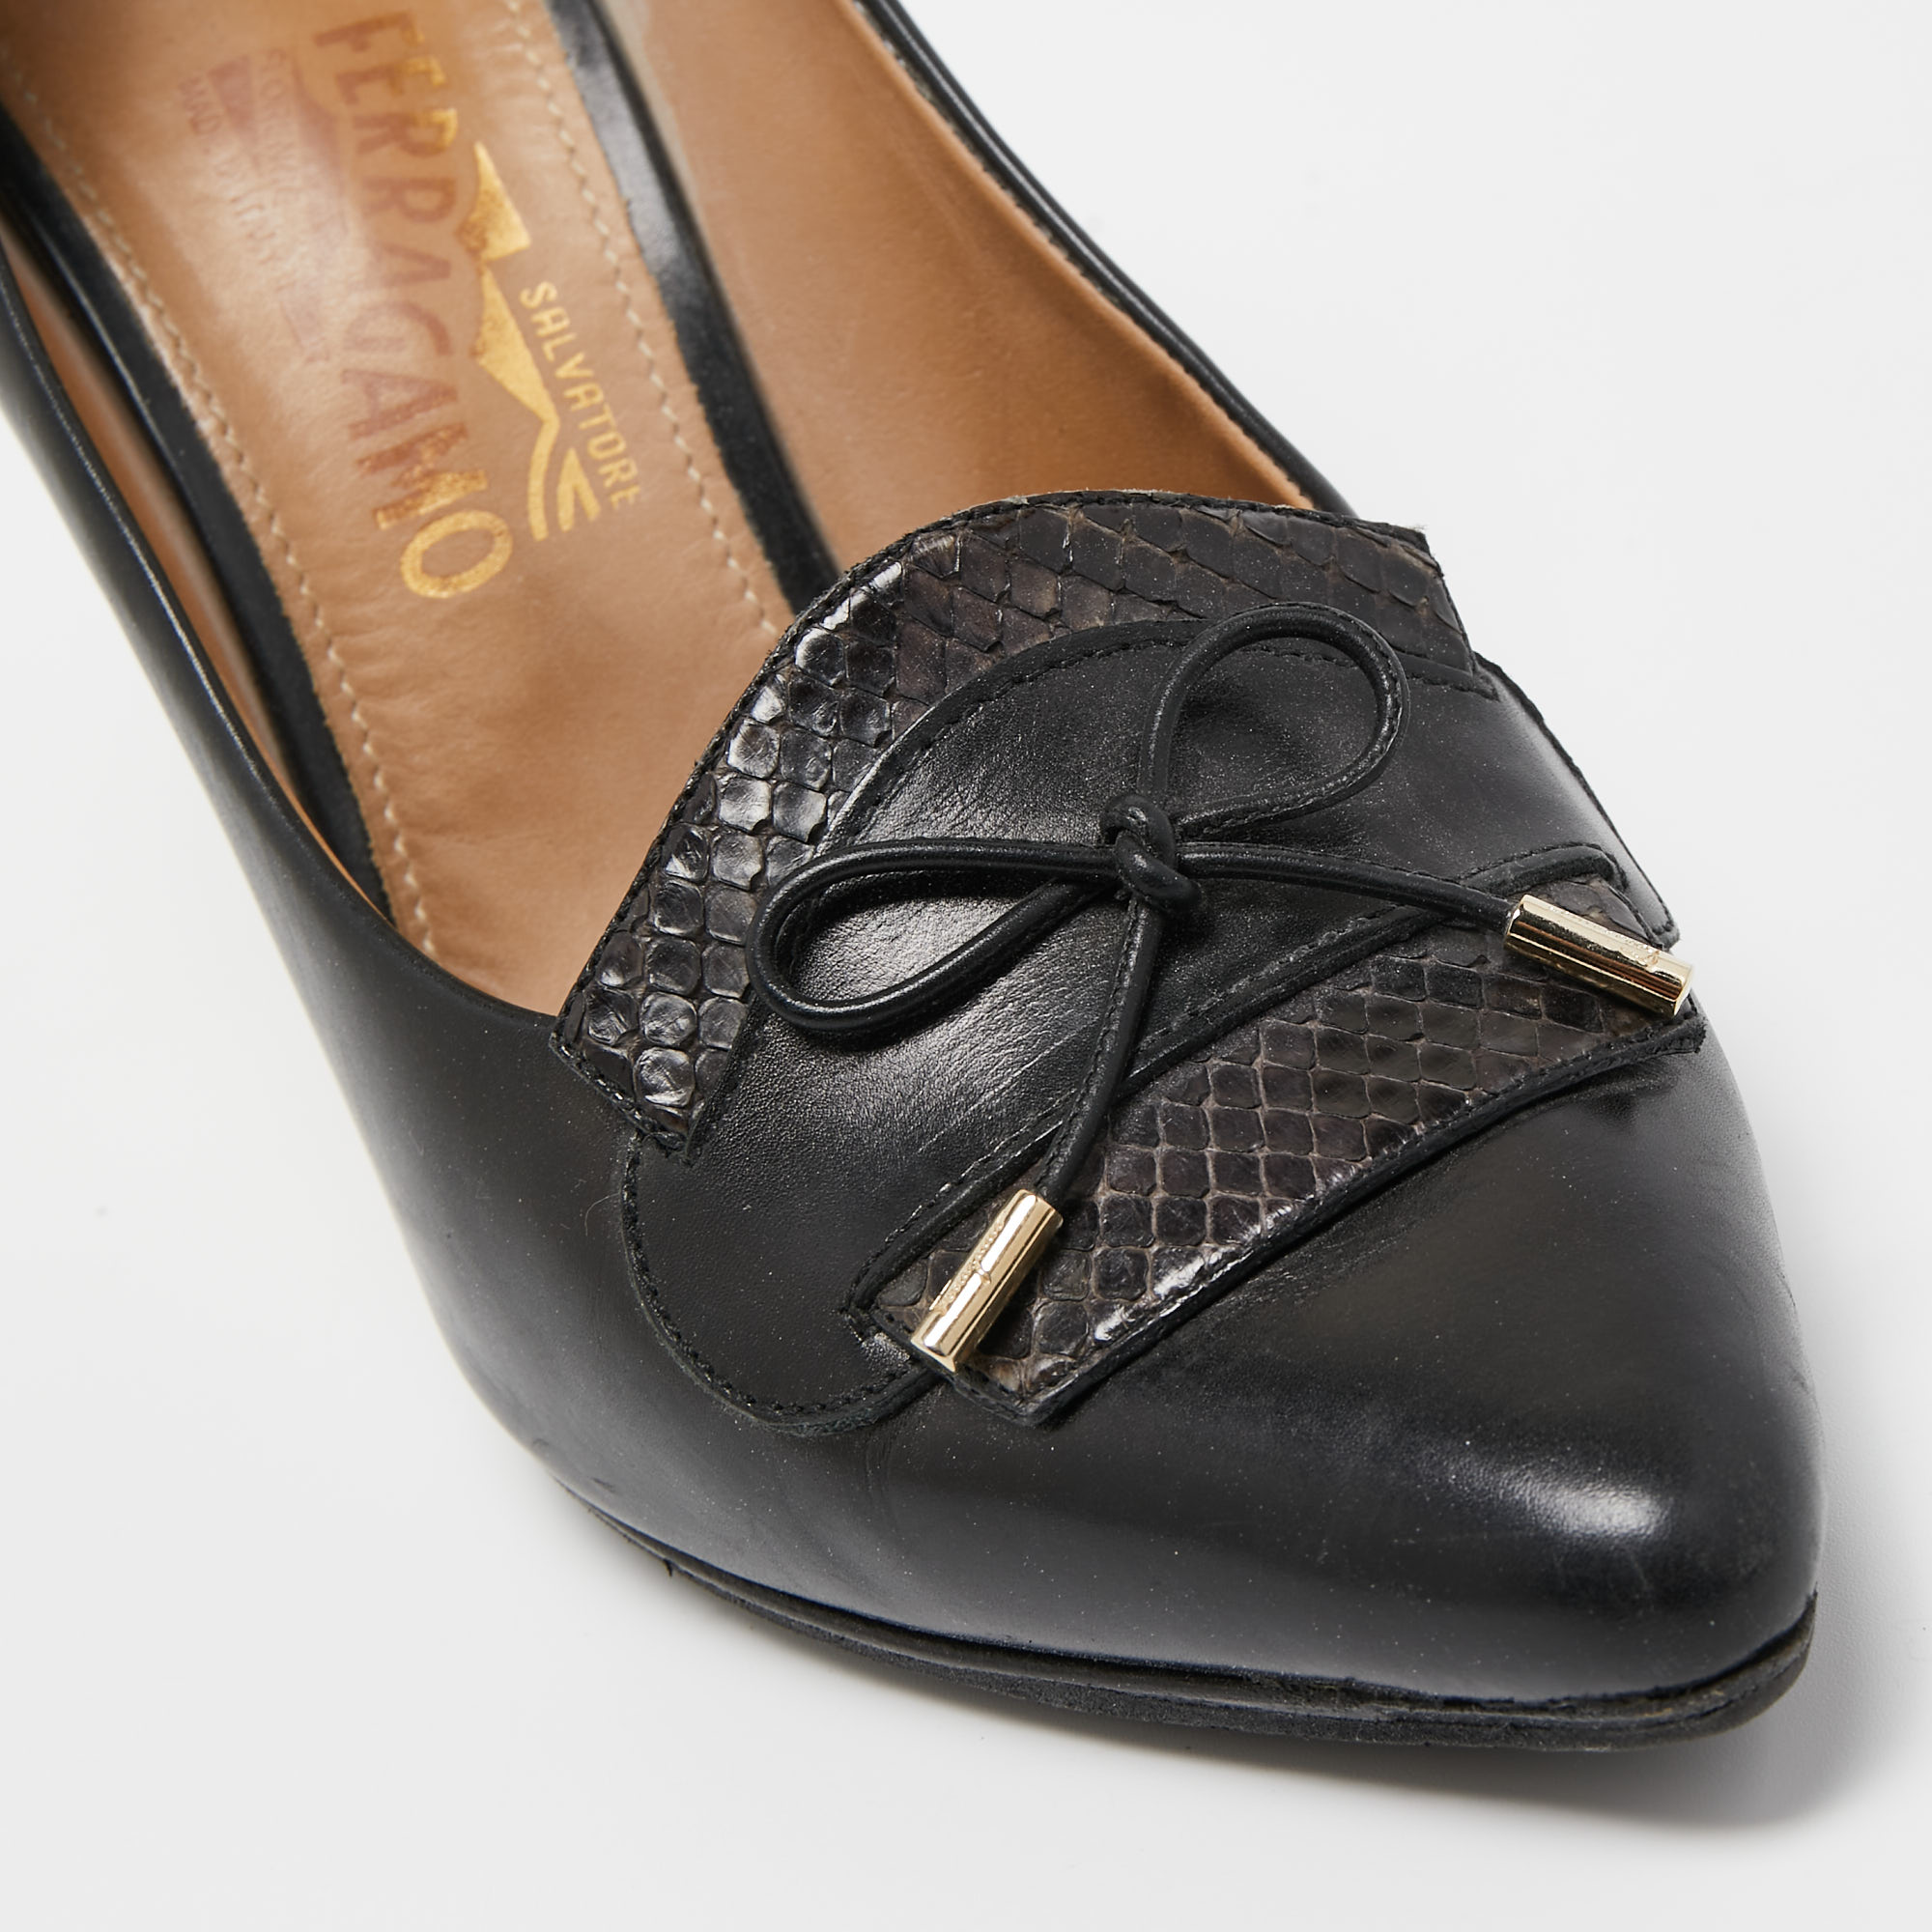 Salvatore Ferragamo Black Leather Pointed Toe Loafer Pumps Size 40